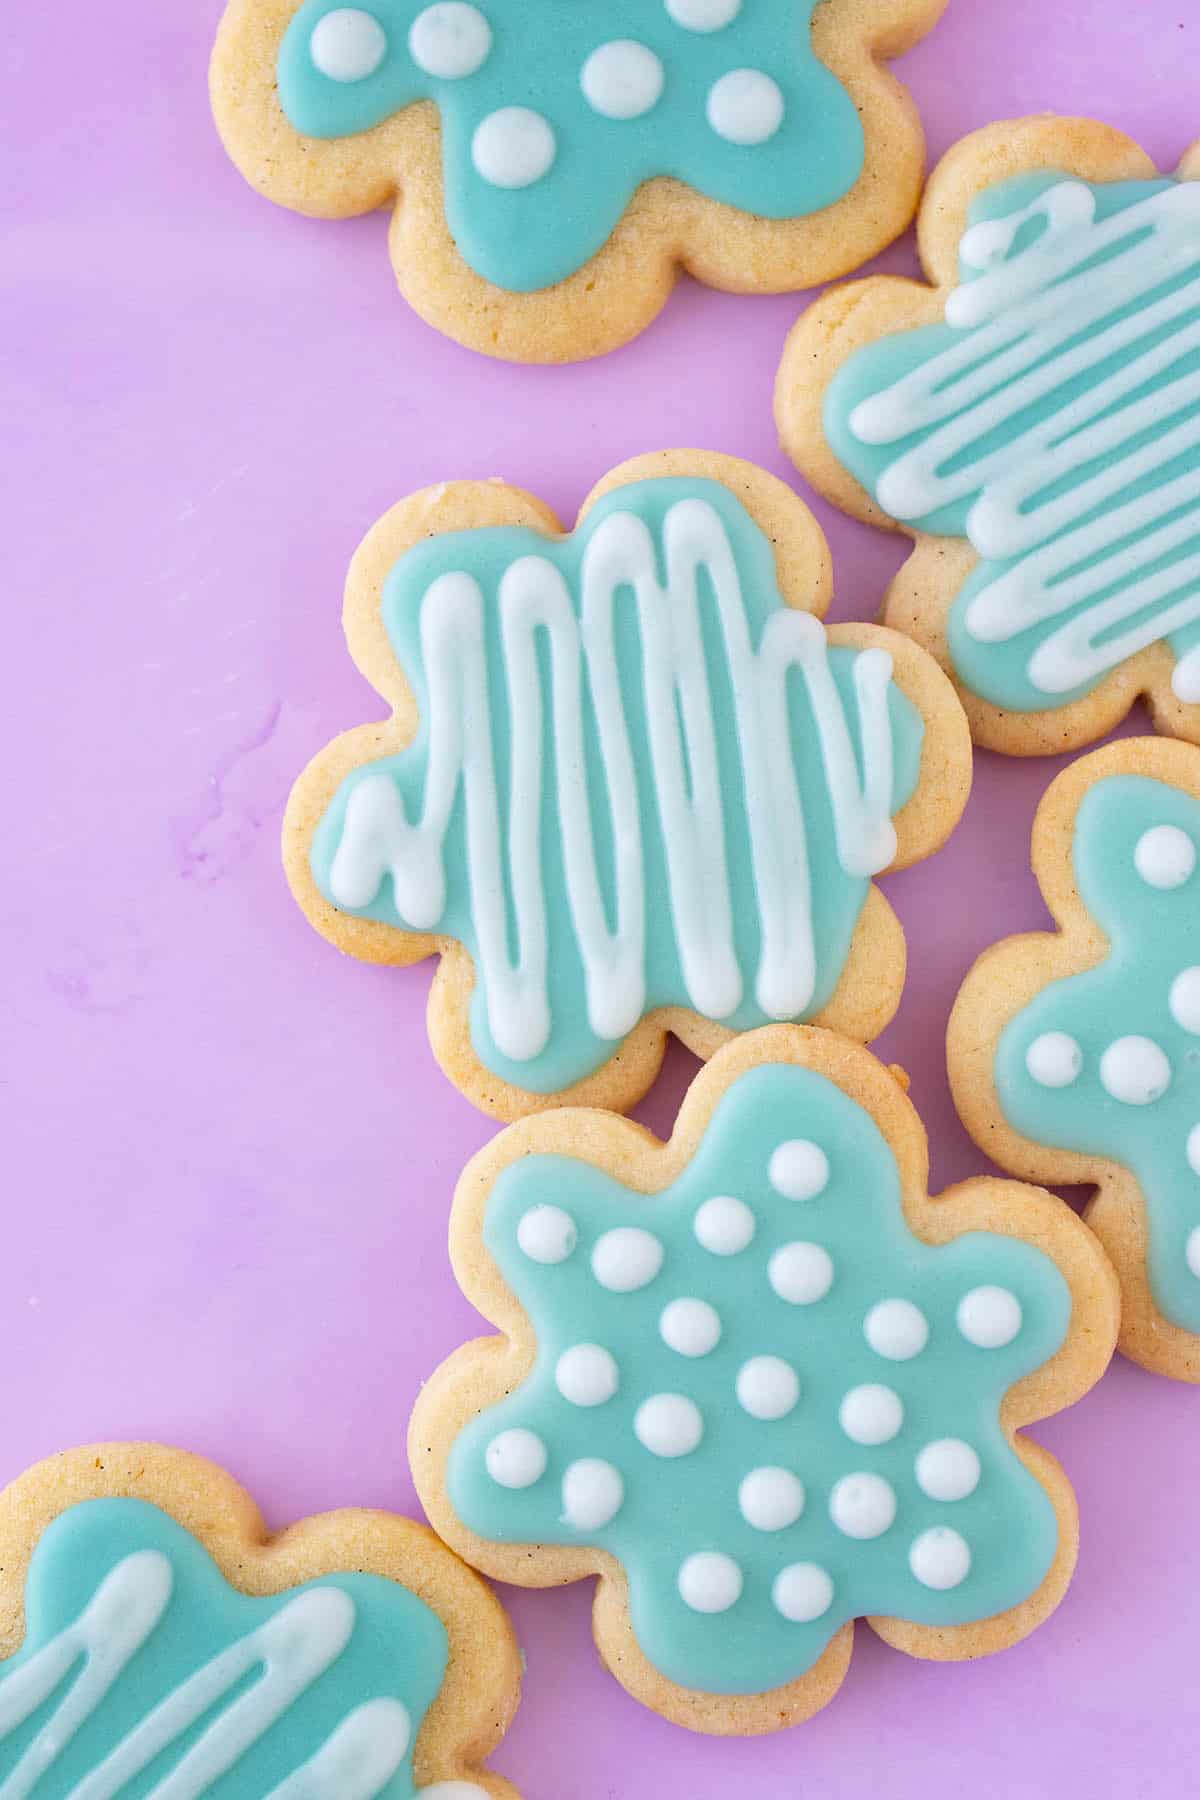 Handmade Sugar Cookies on a purple background.